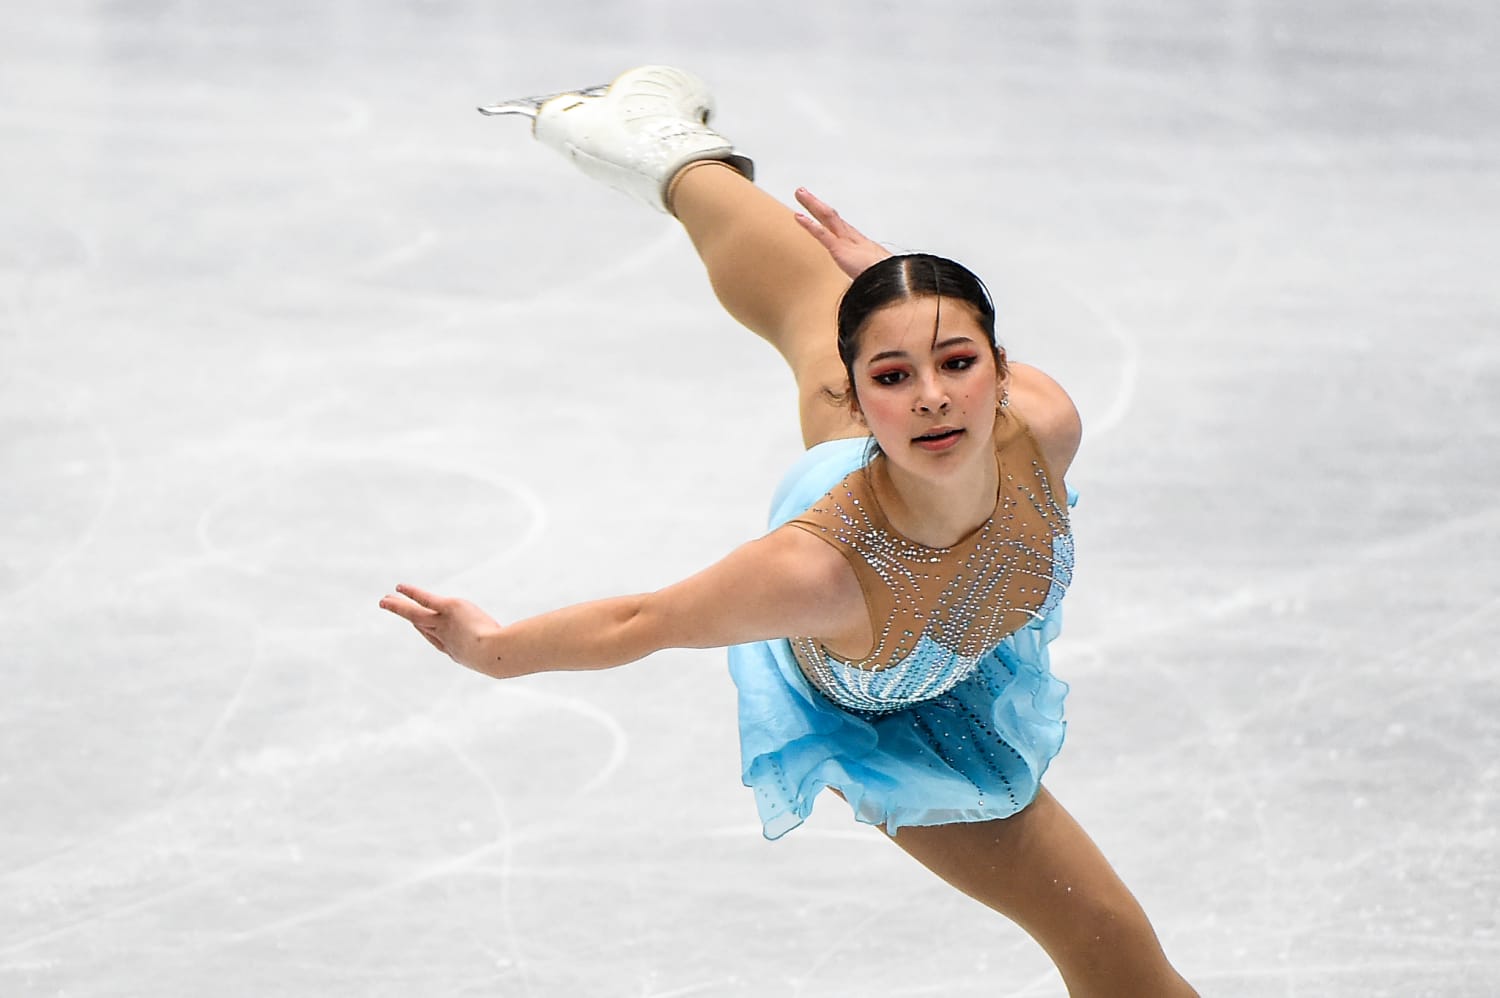 Olympic figure skater Alysa Liu, 16, announces retirement on Instagram